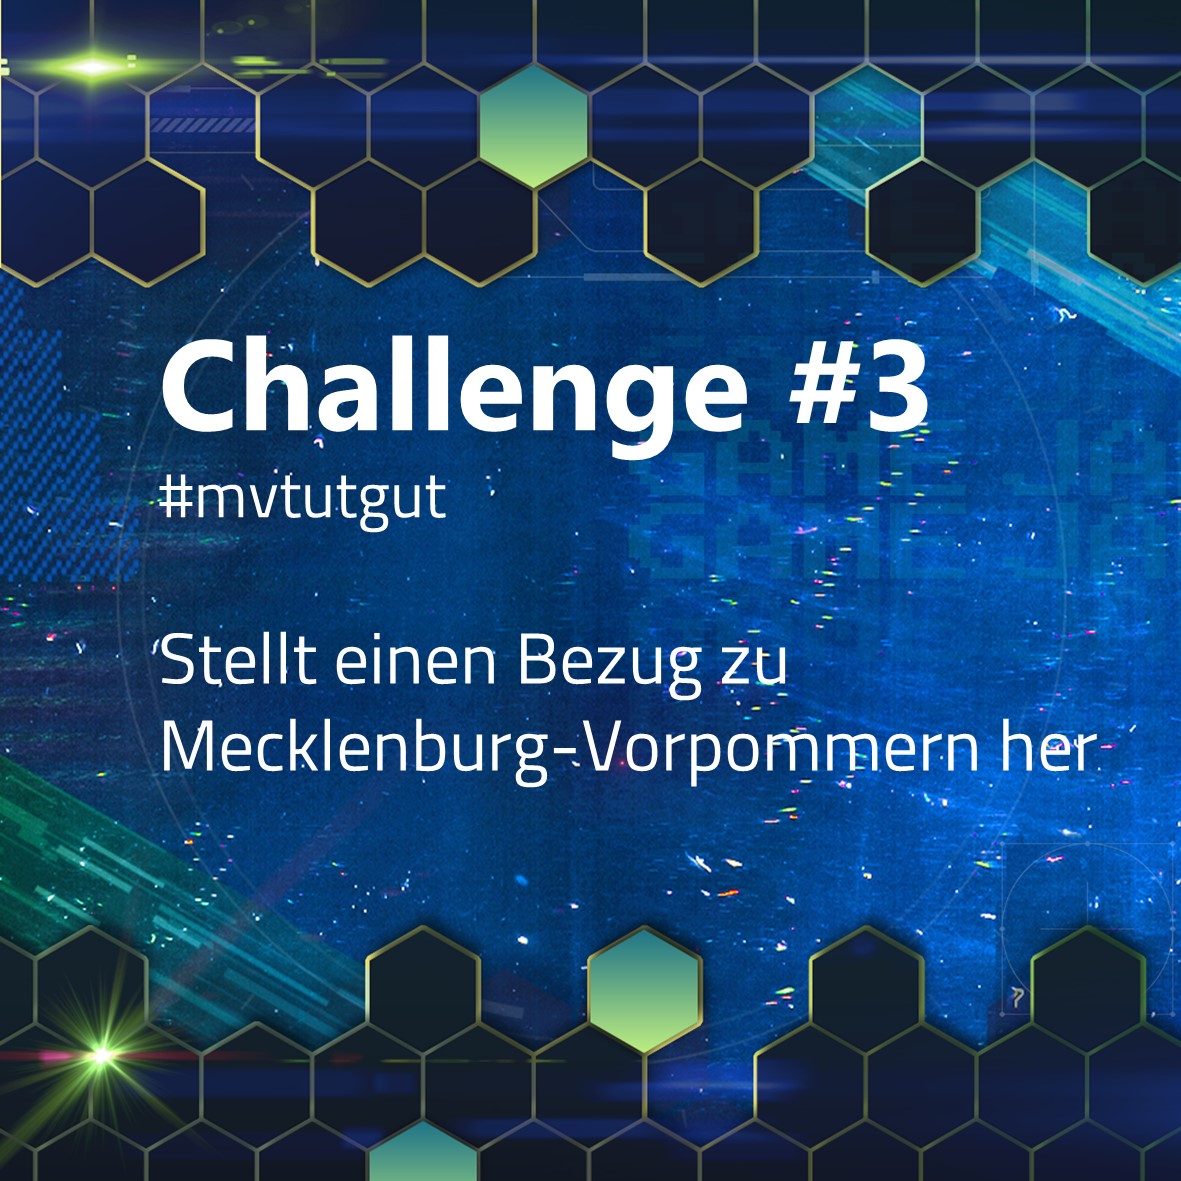 Challenge 3